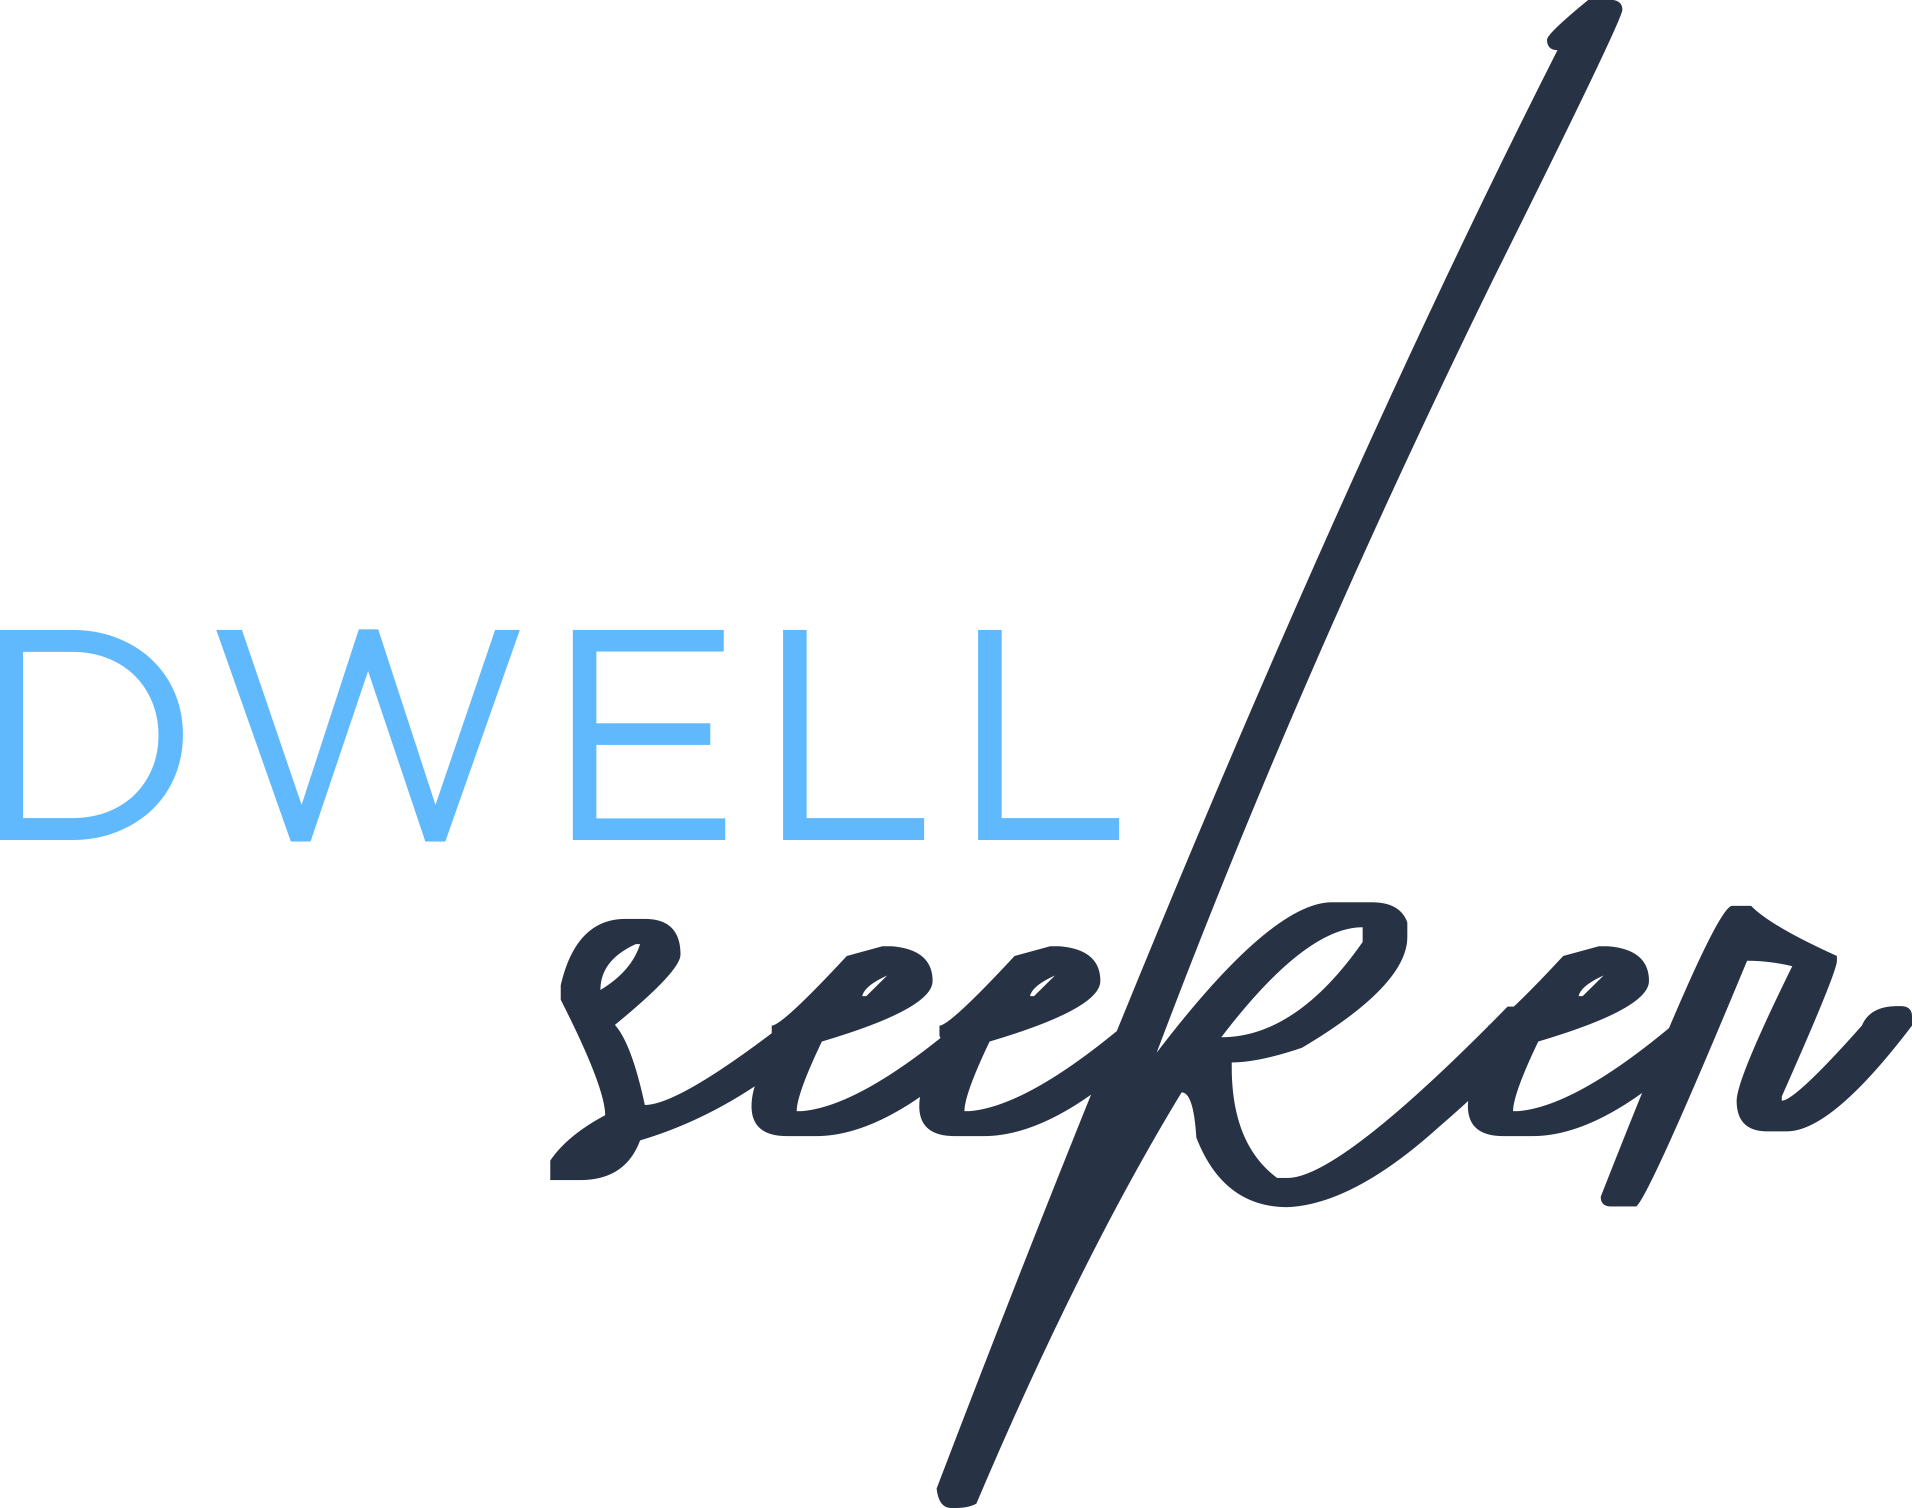 dwellseeker logo.png